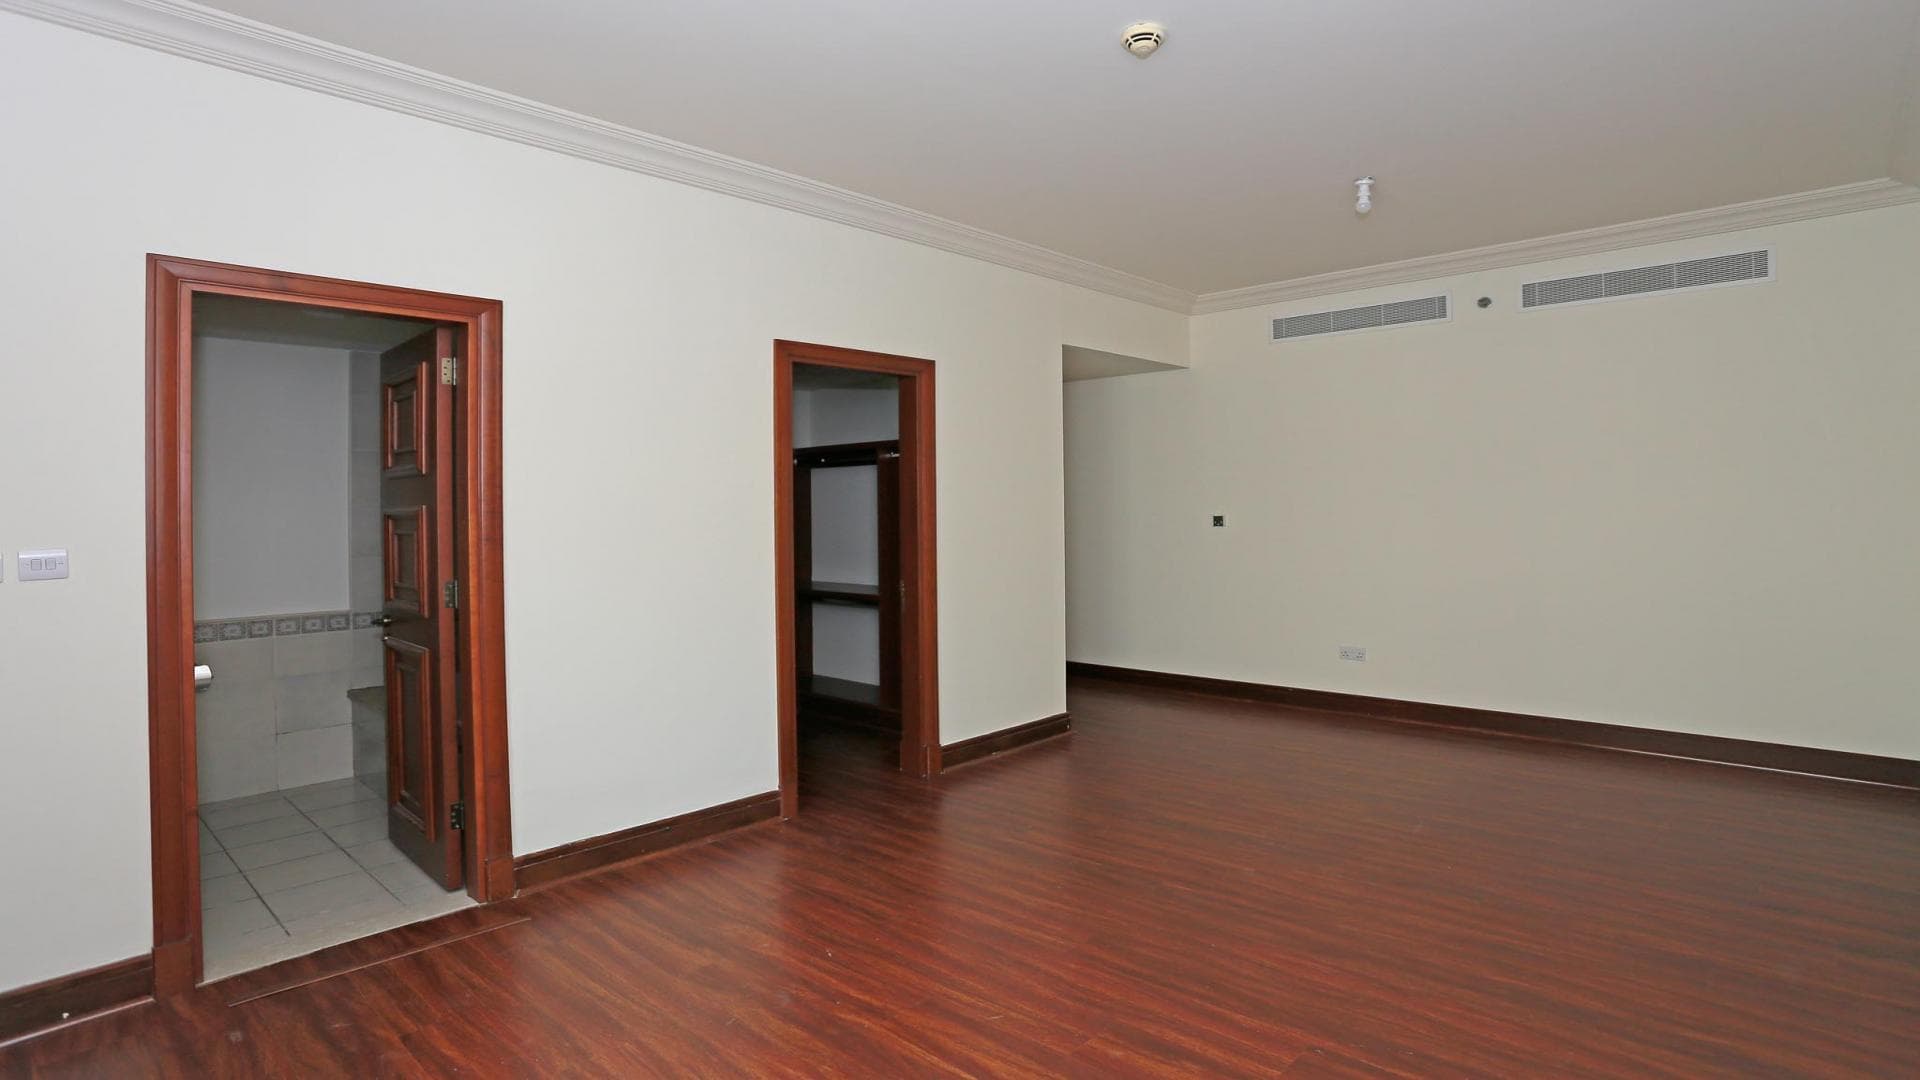 3 Bedroom Apartment For Sale Boulevard Plaza 1 Lp37433 23b4e750587a1600.jpg